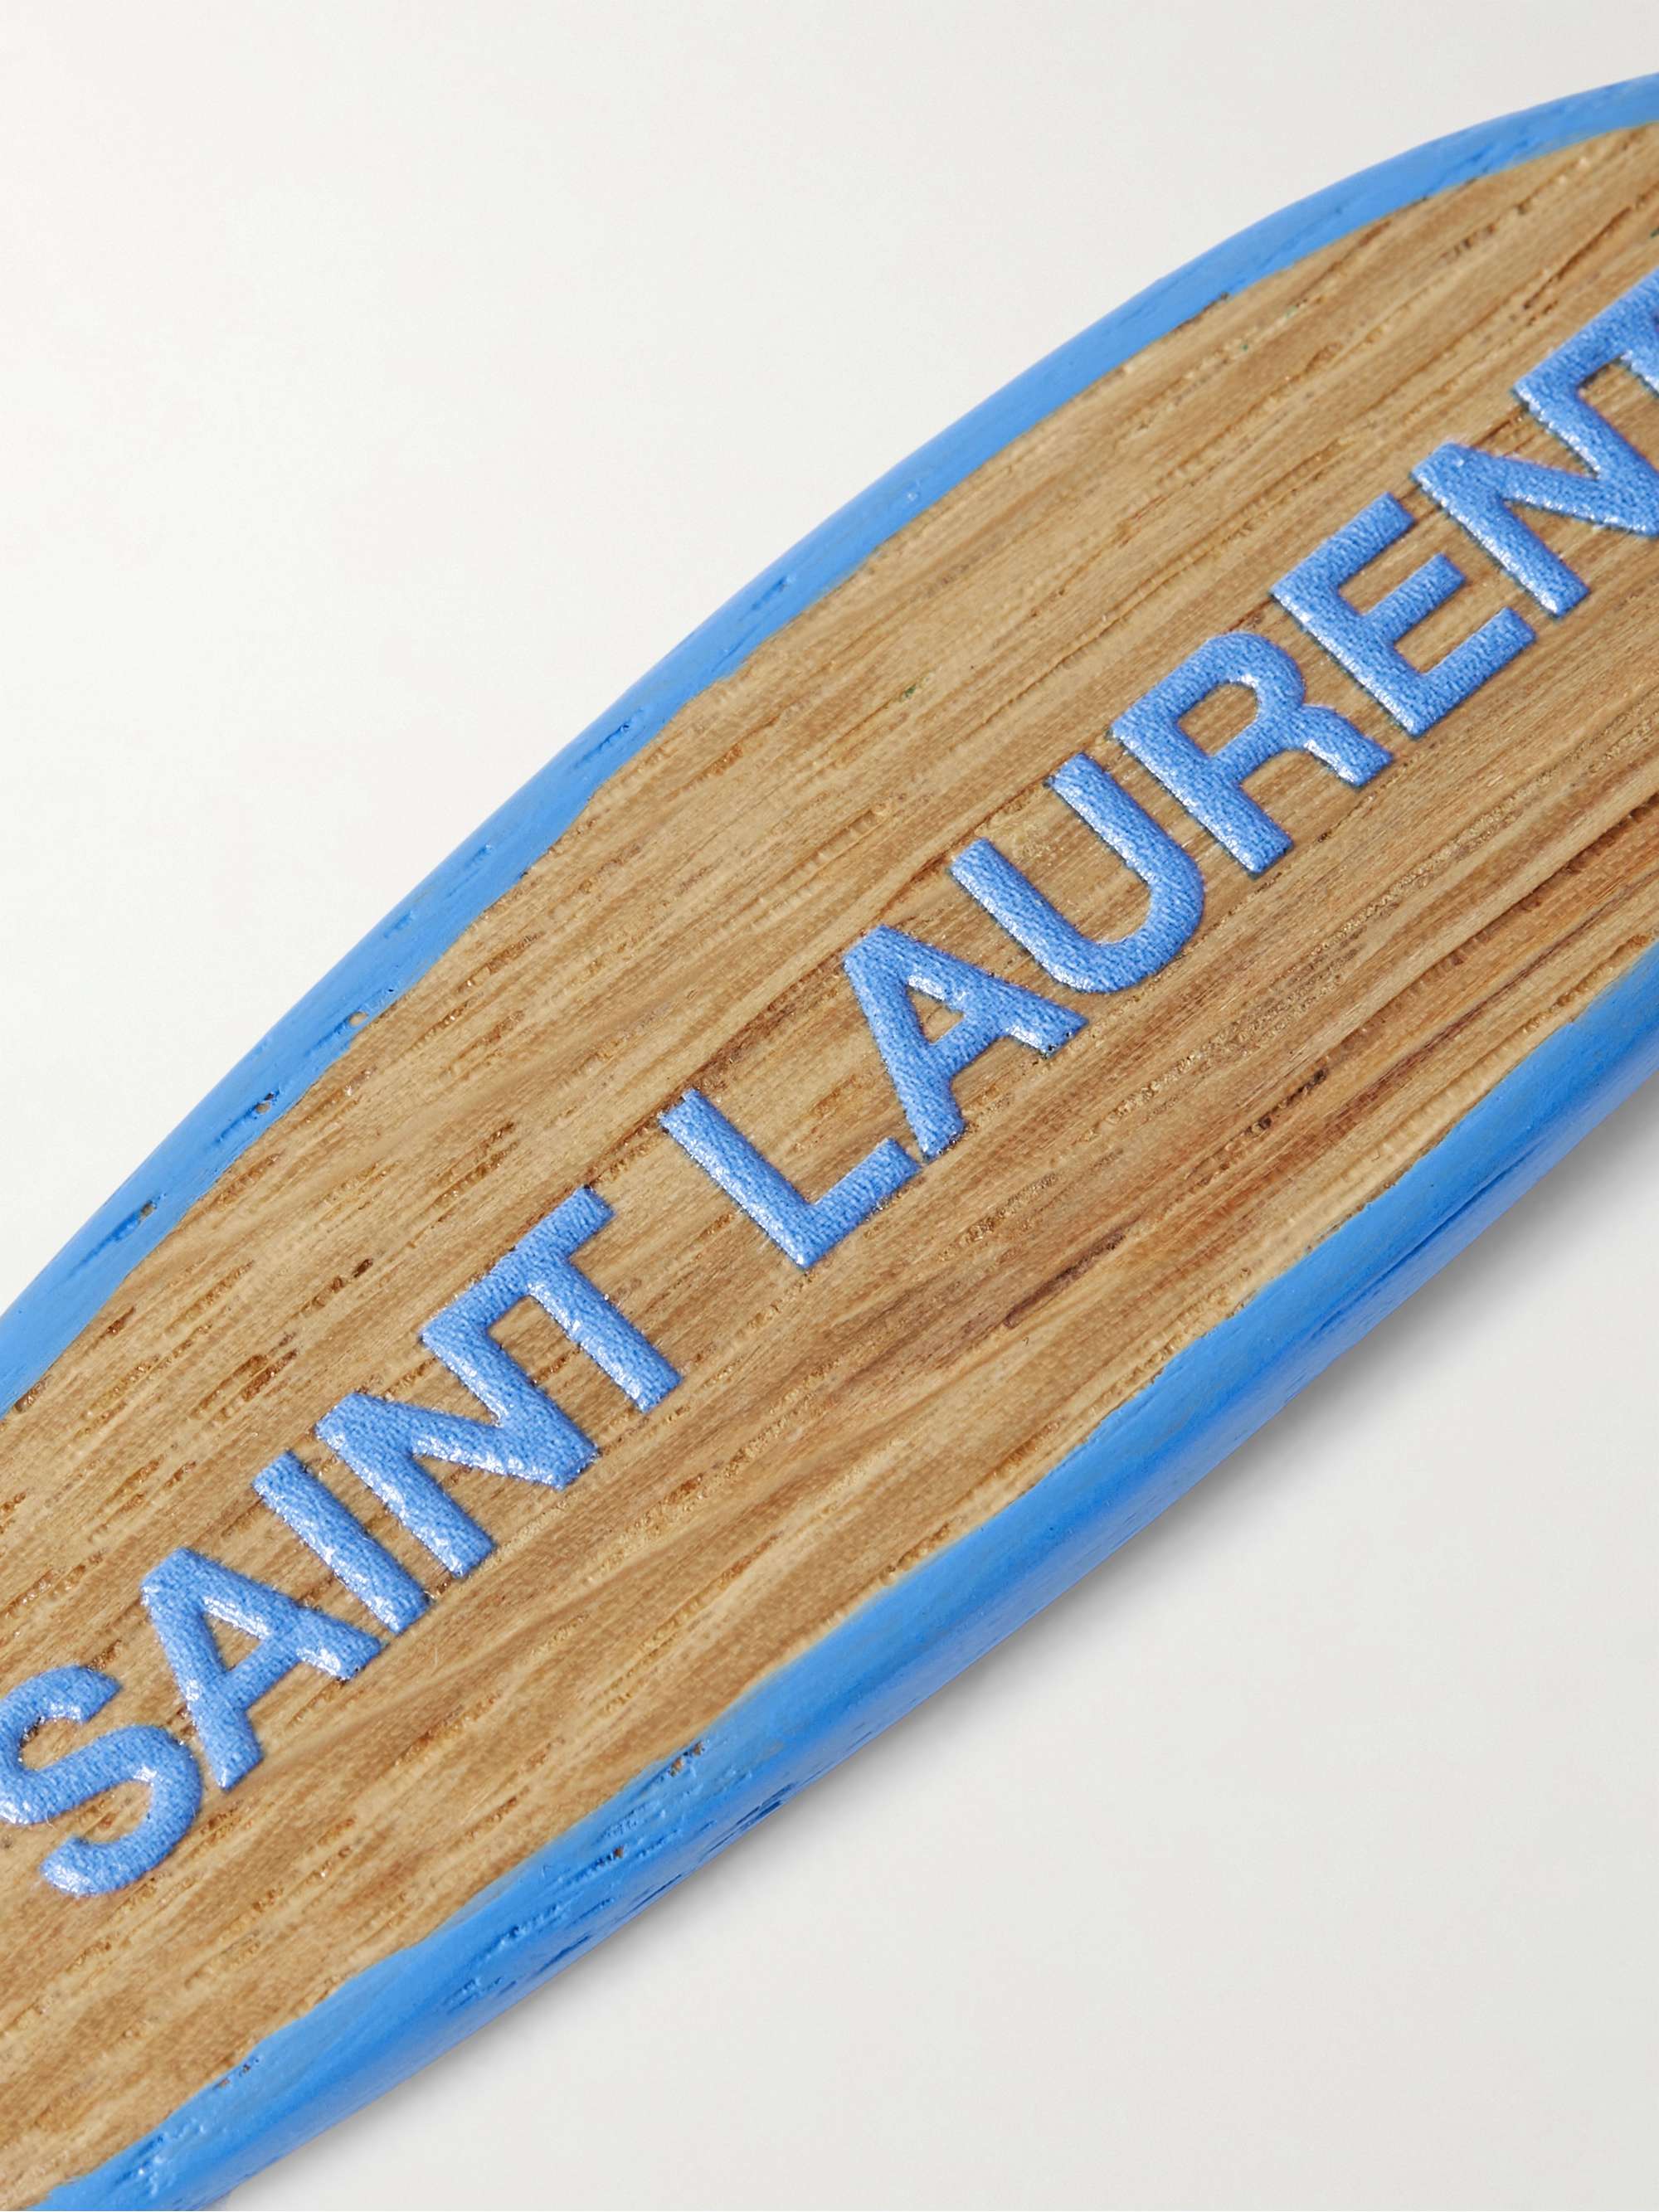 SAINT LAURENT Surf Logo-Print Wood and Silver-Tone Key Fob